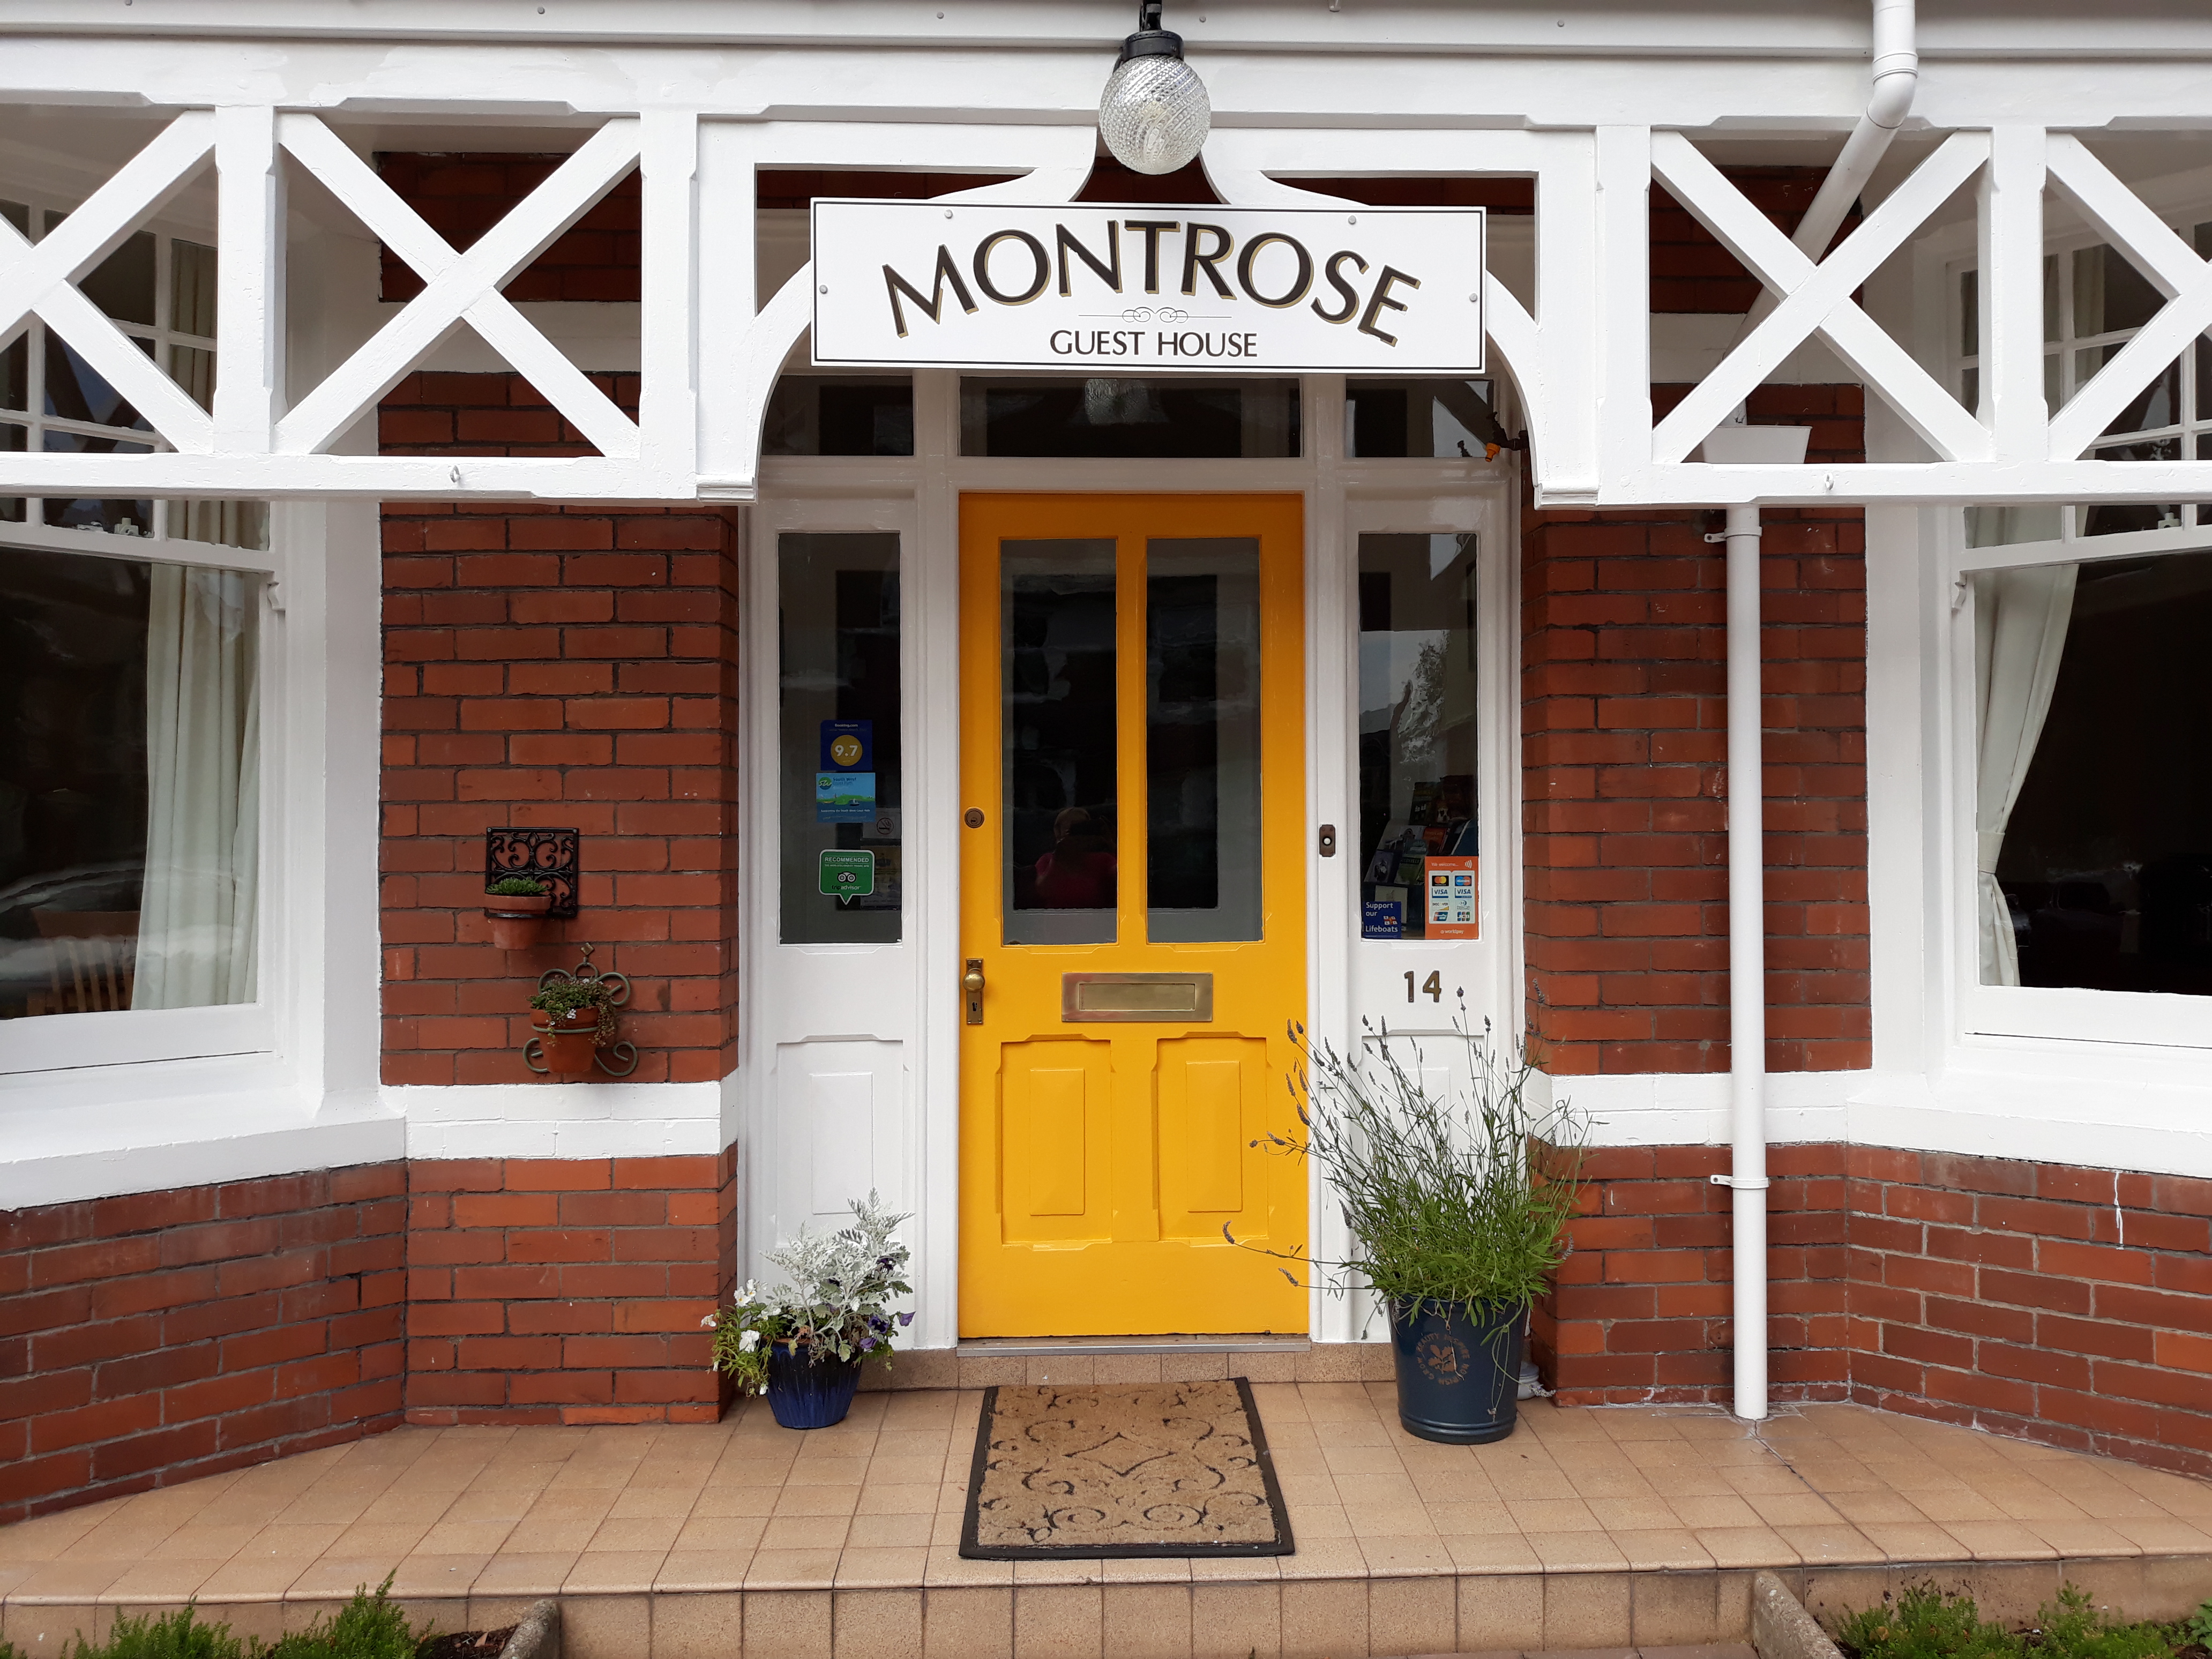 B & B Minehead, bed and breakfast minehead, b and b Minehead, Montrose Guest House